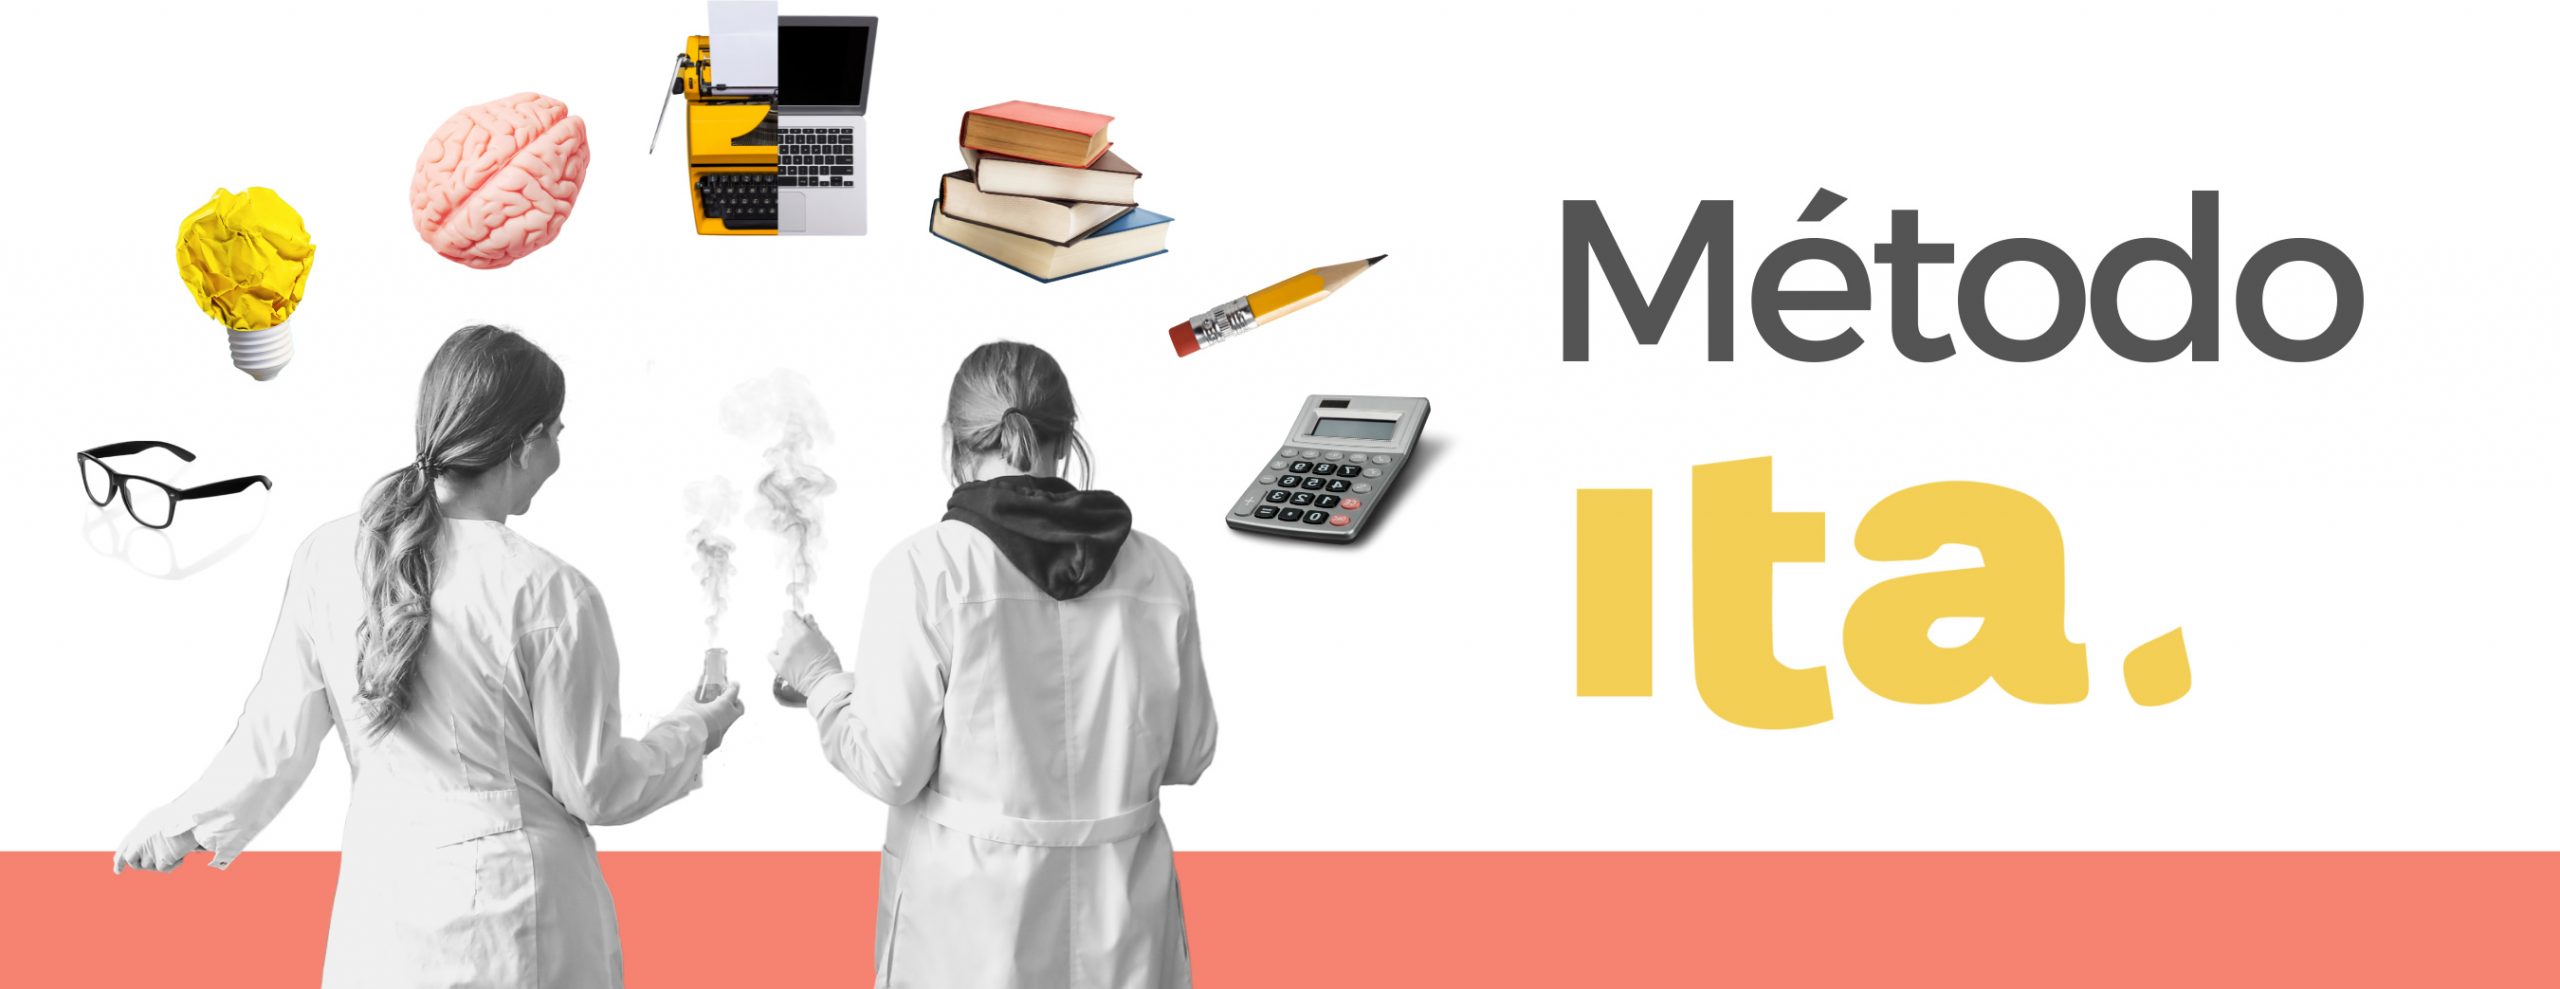 Imagen de portada de sección "Método Ita" - Se visualizan dos chicas mirando hacia figuras de útiles escolares, calculadora, libros y computadora